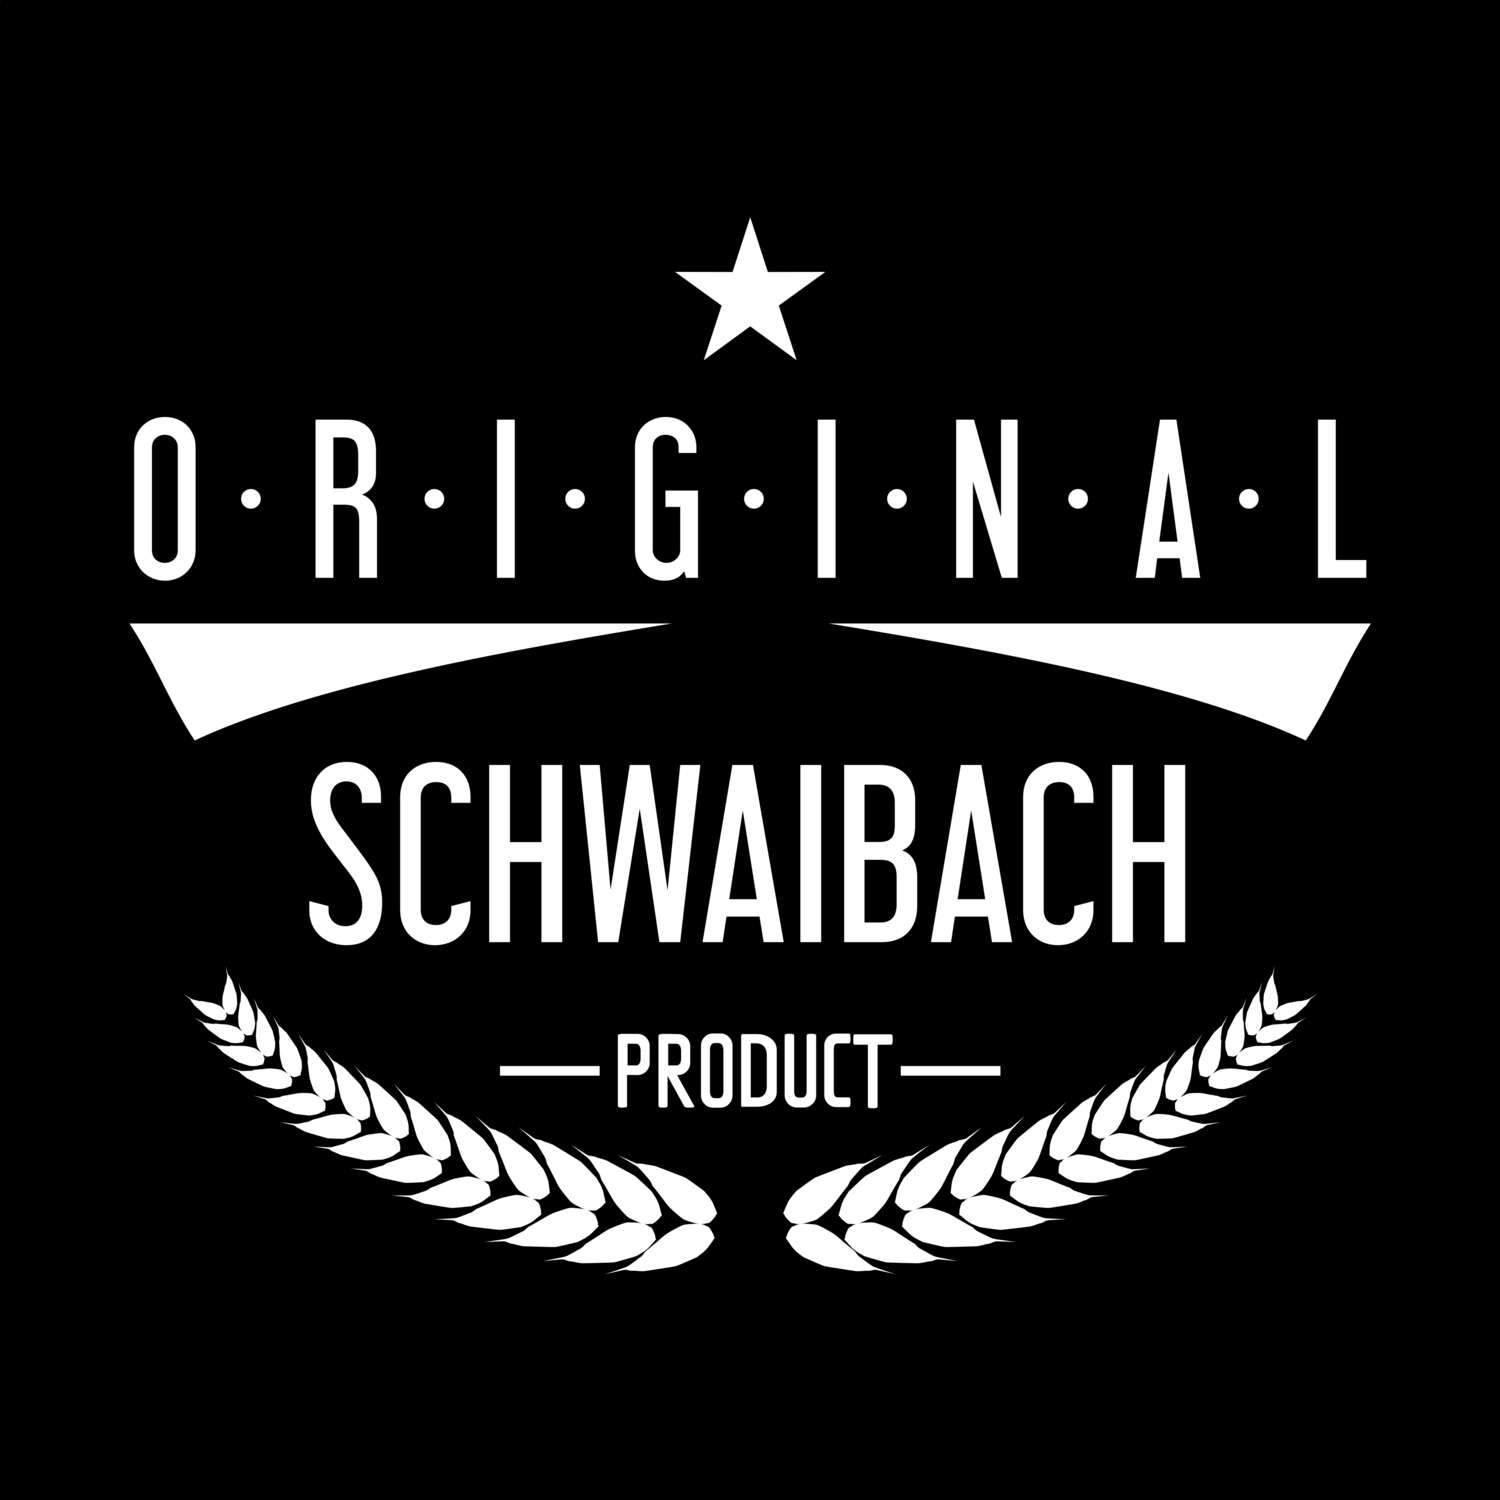 Schwaibach T-Shirt »Original Product«